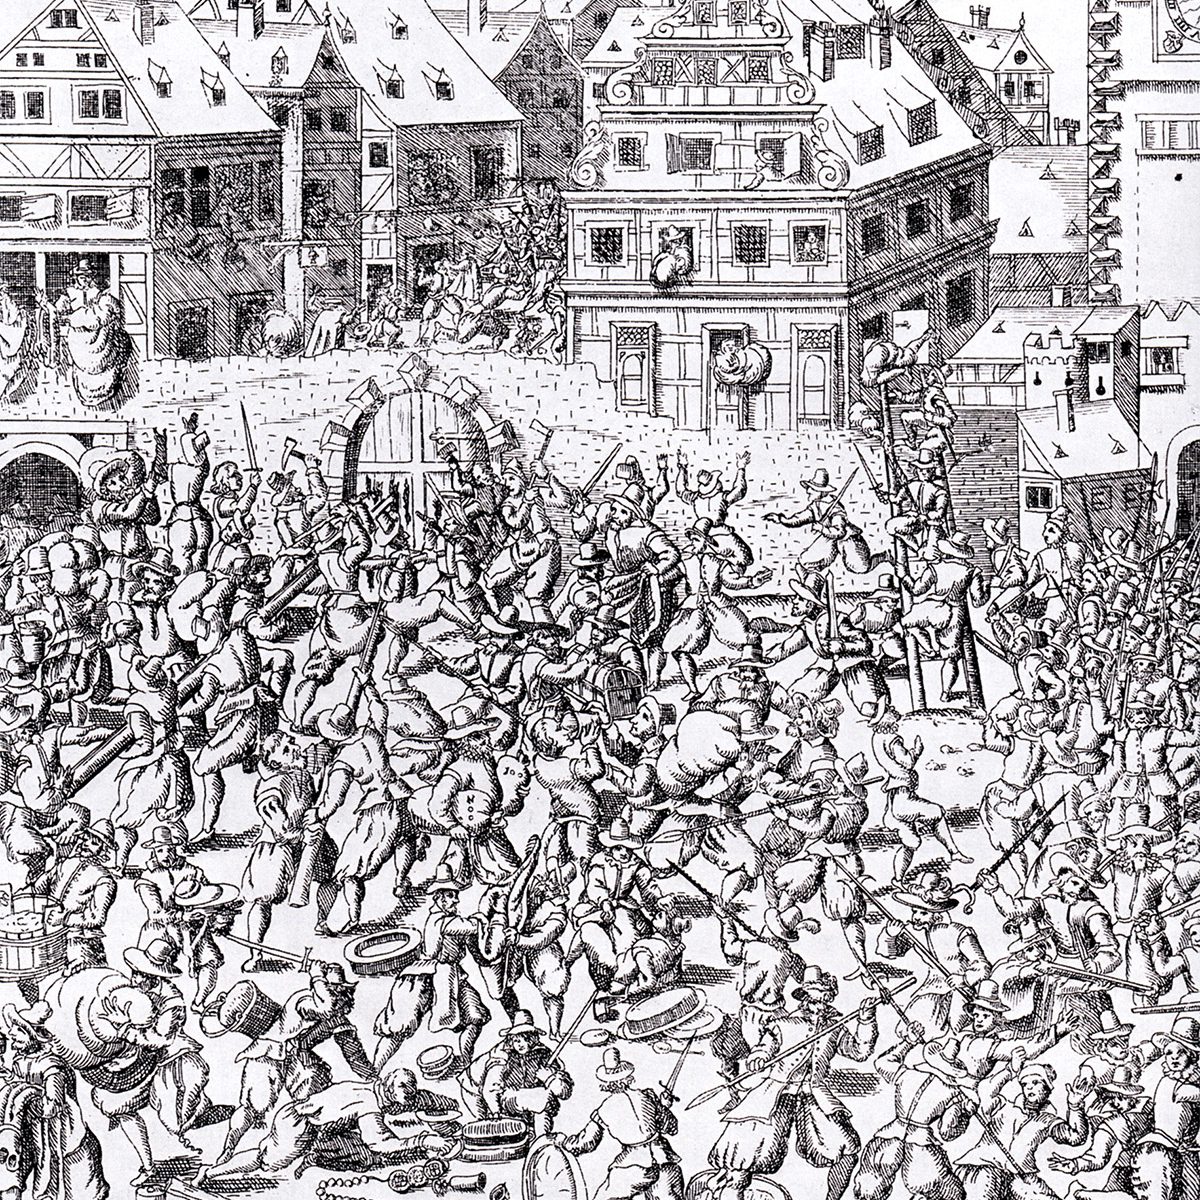 Pogrom in Frankfurt August 22, 1614